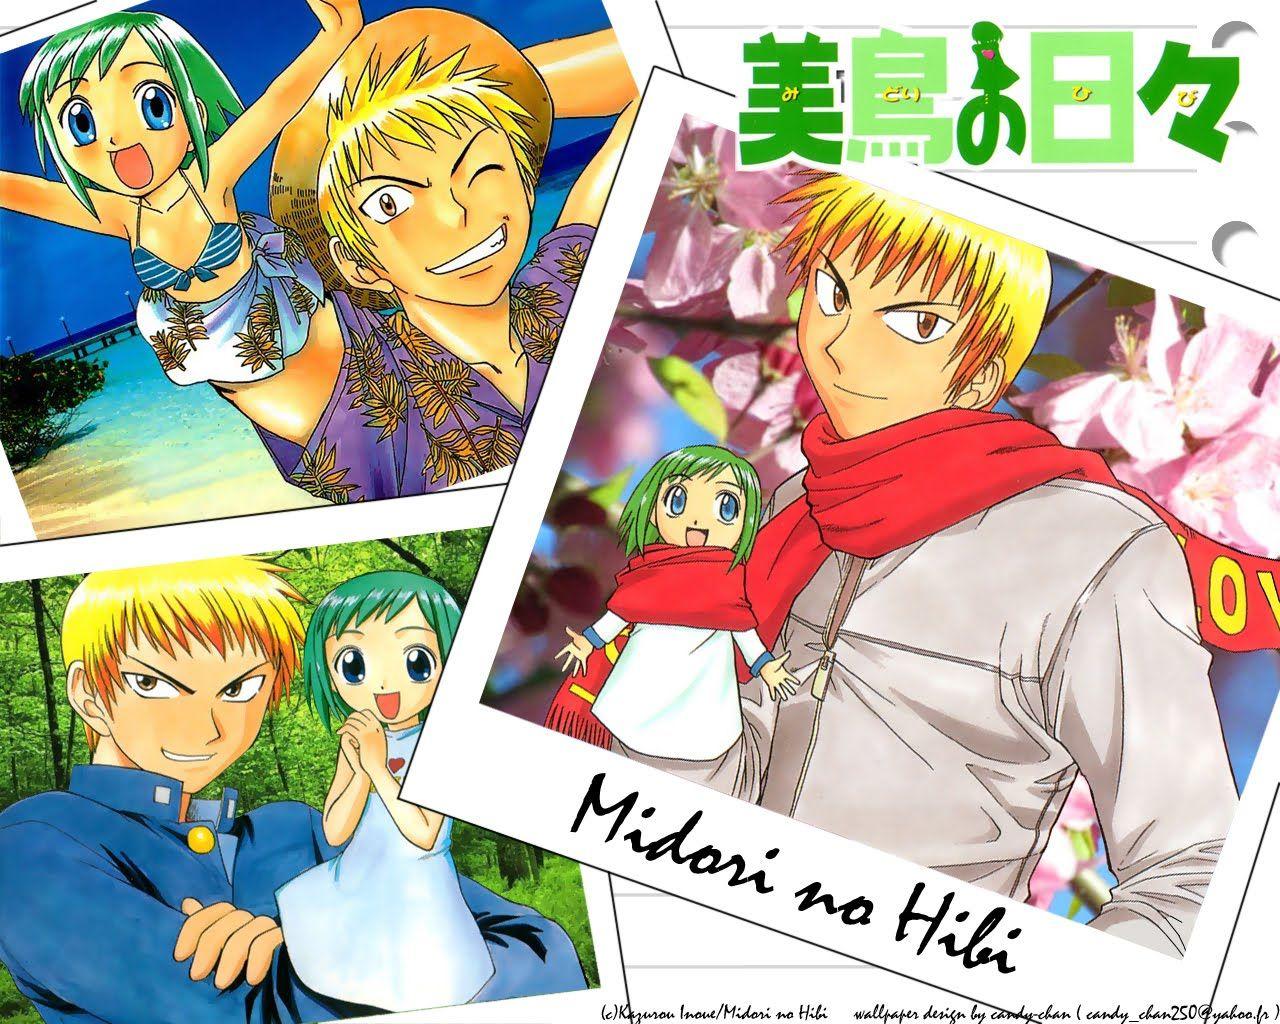 Midori Days Midori no Hibi Anime Fabric Wall Scroll Poster [WP] (16x22)  Inches.